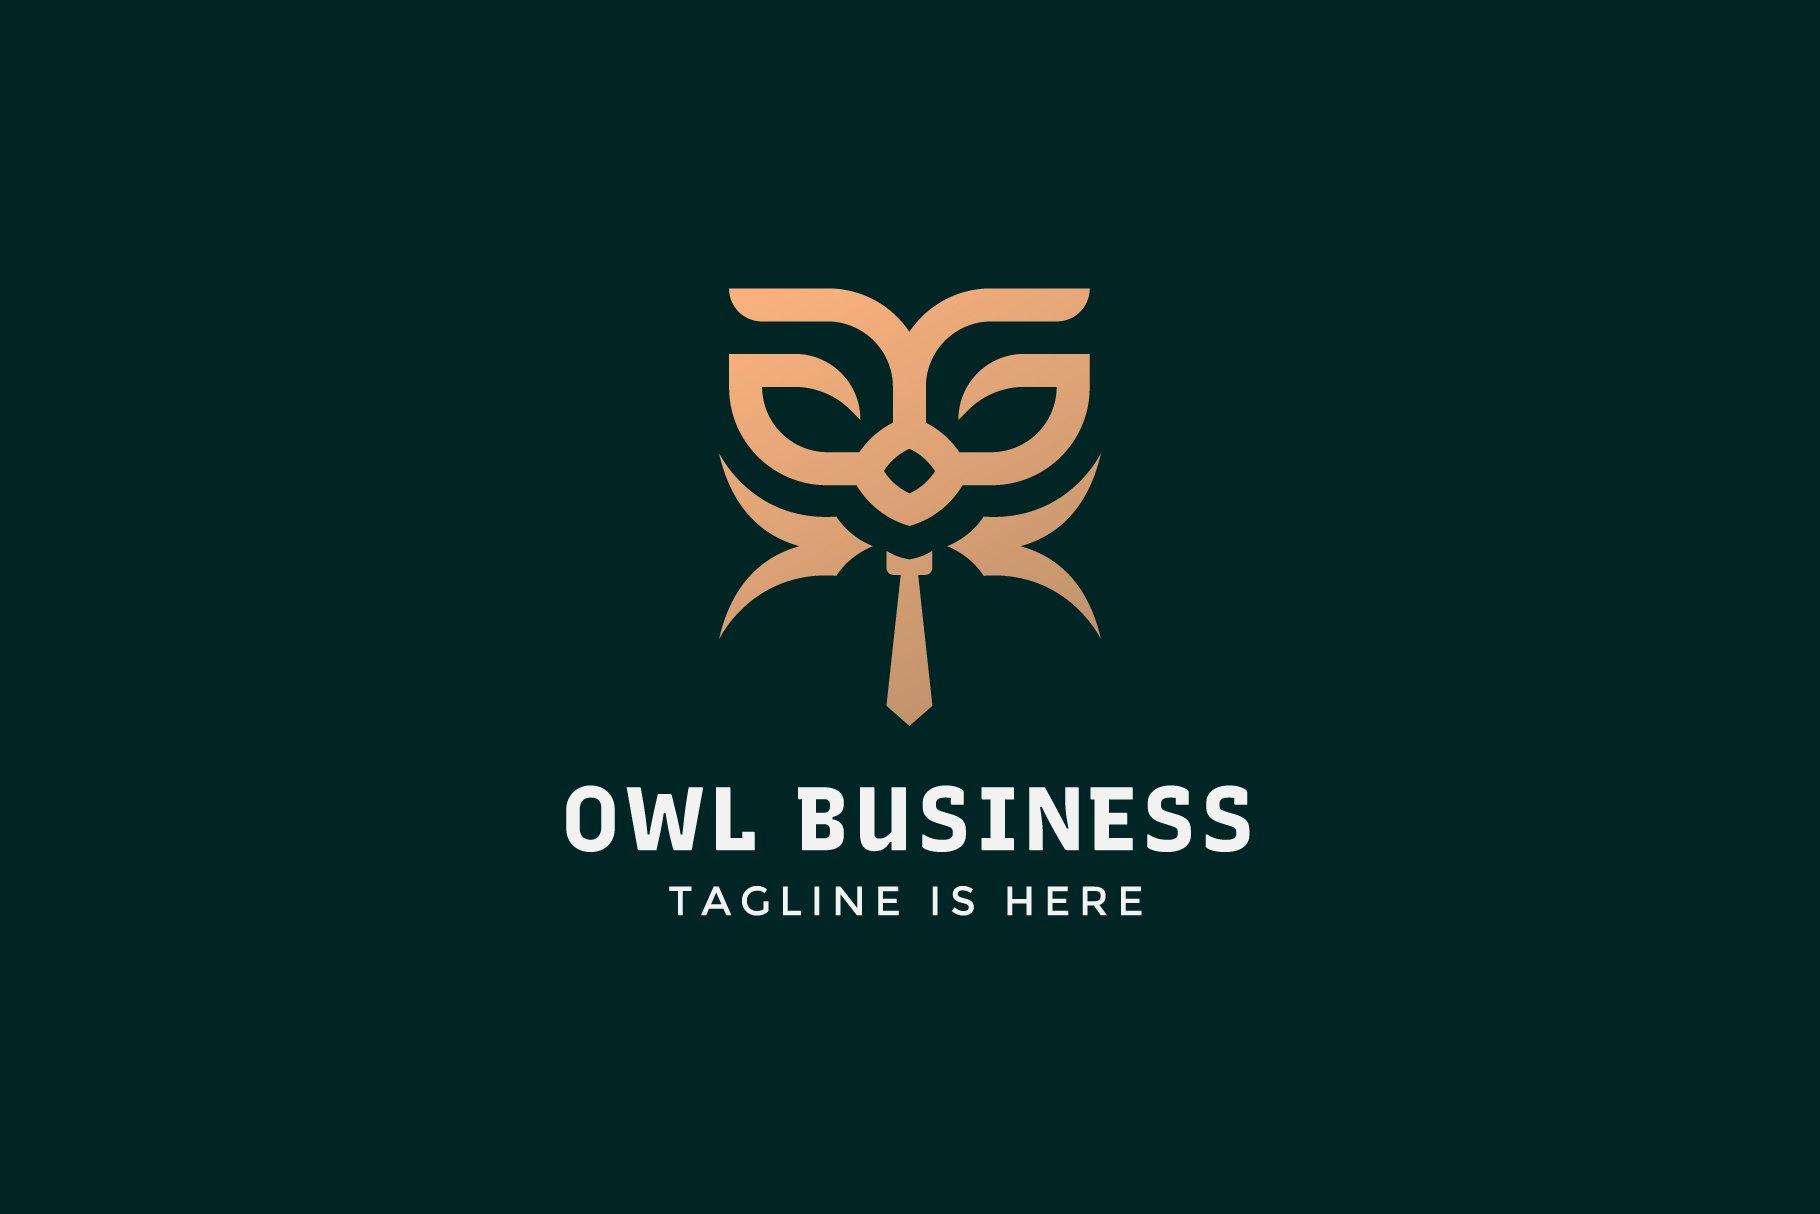 Owl Business Logo cover image.